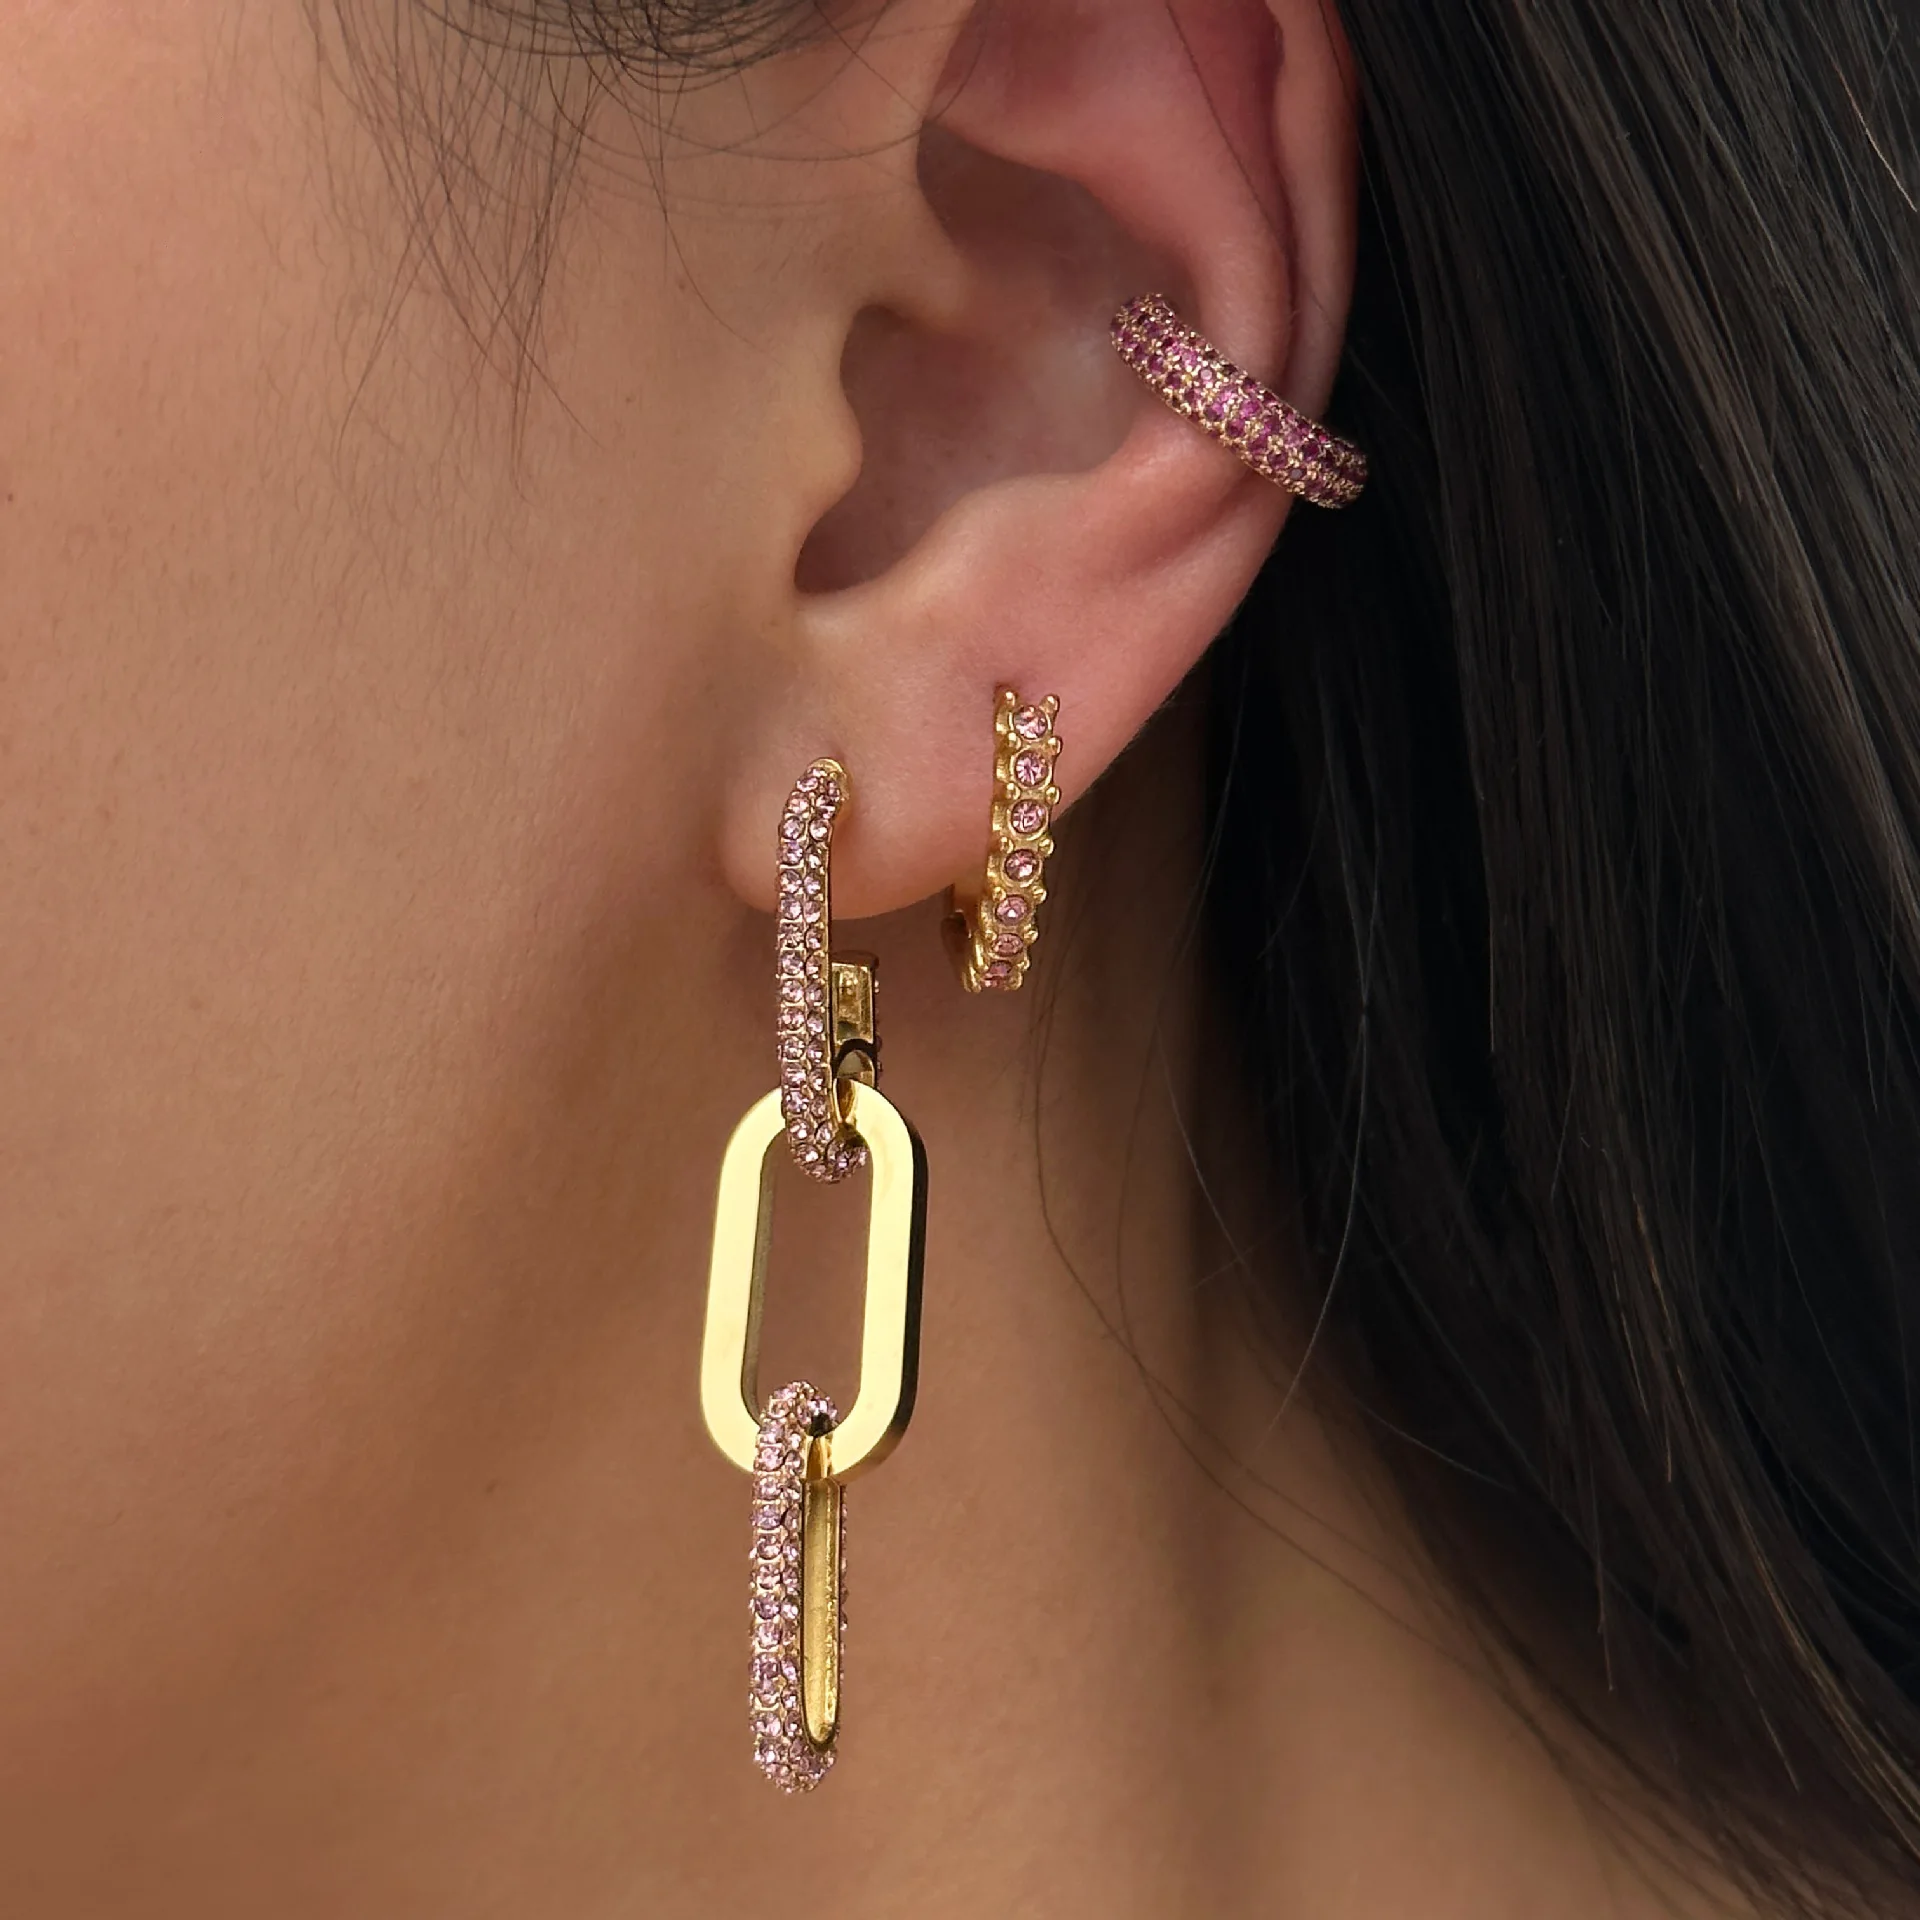 100pairs Plastic Transparent Earrings, Earring Protectors